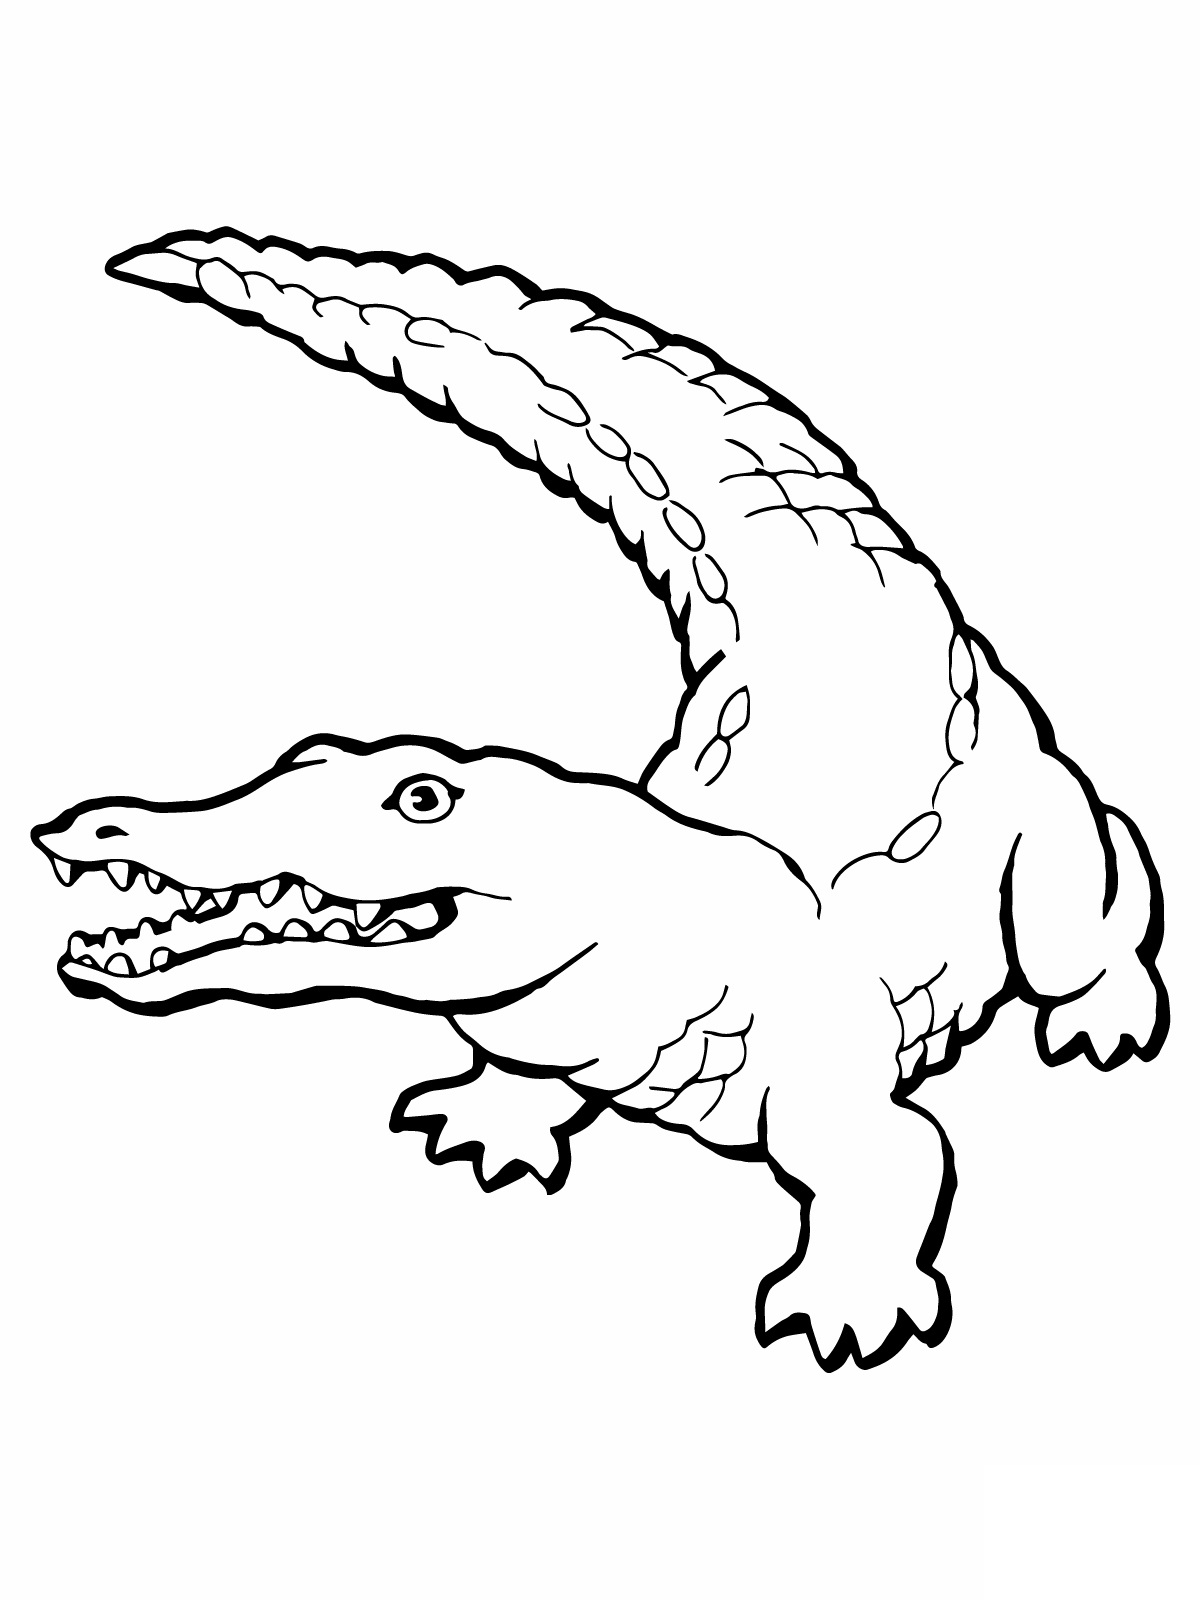 Baby Crocodile Drawing at GetDrawings | Free download